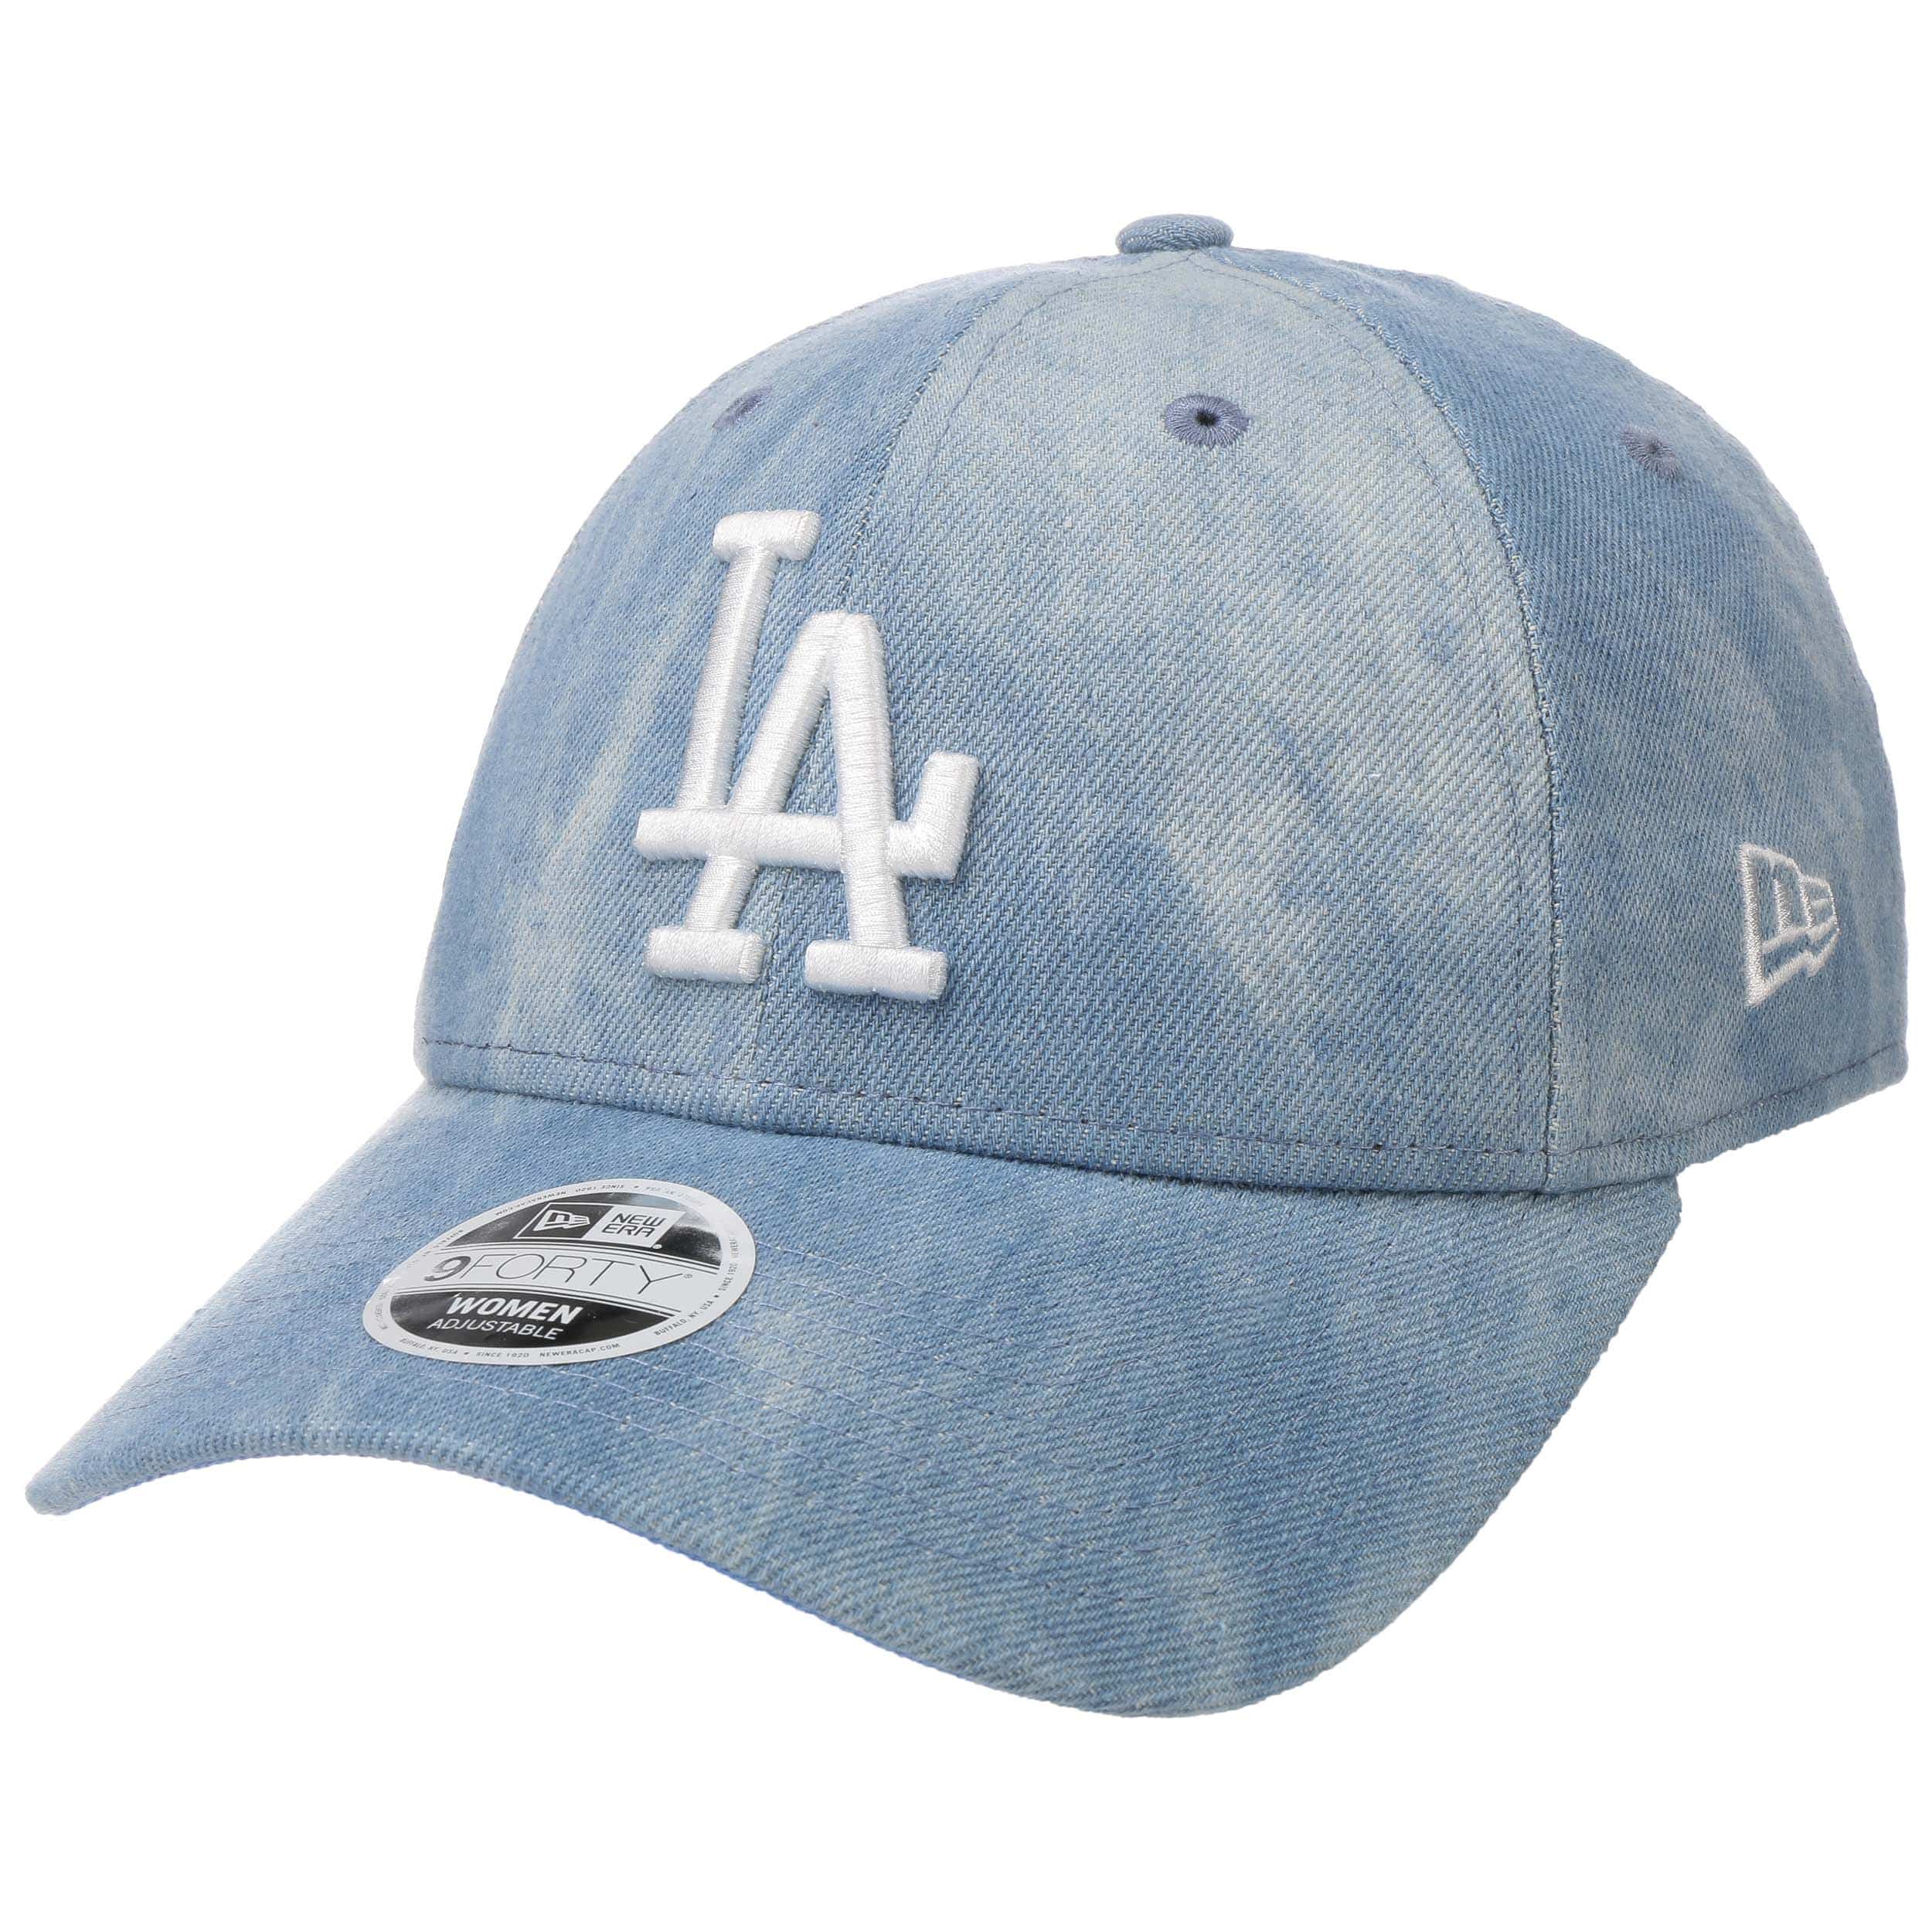 Blue New Era MLB LA Dodgers 9FORTY Side Patch Cap